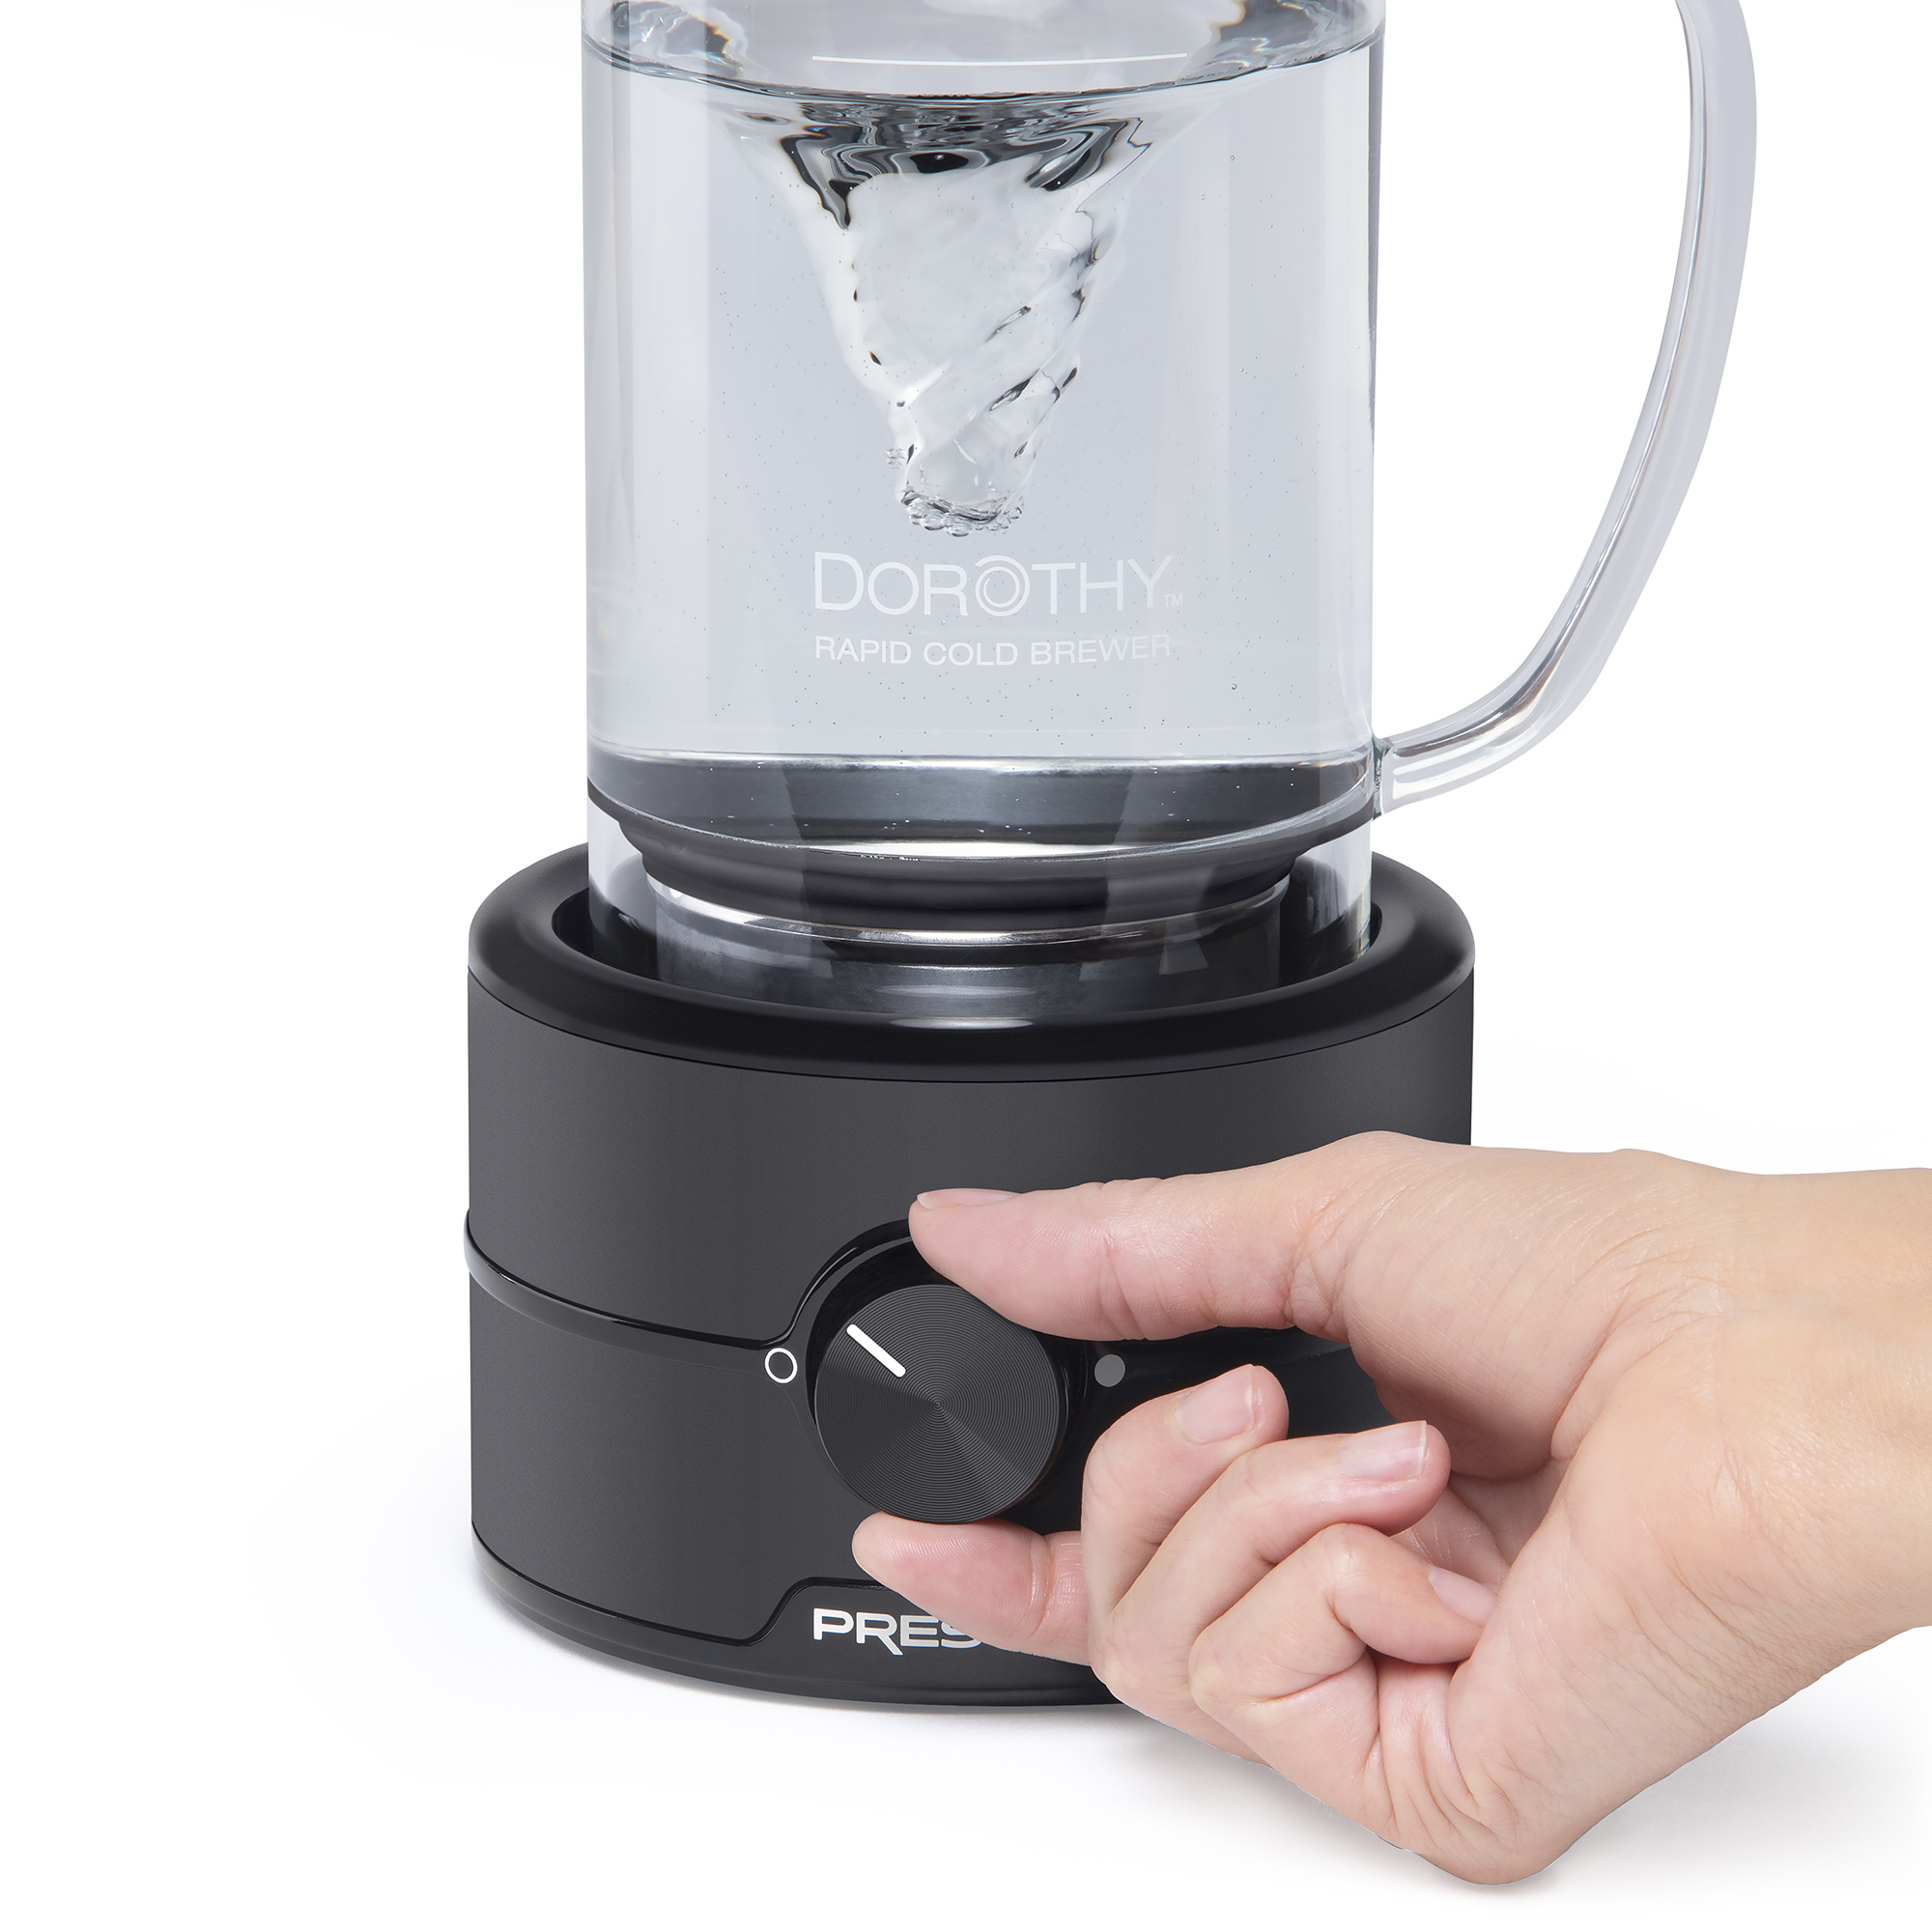 Presto Dorothy™ Rapid Cold Brew Coffee Maker - 02937 - image 3 of 8